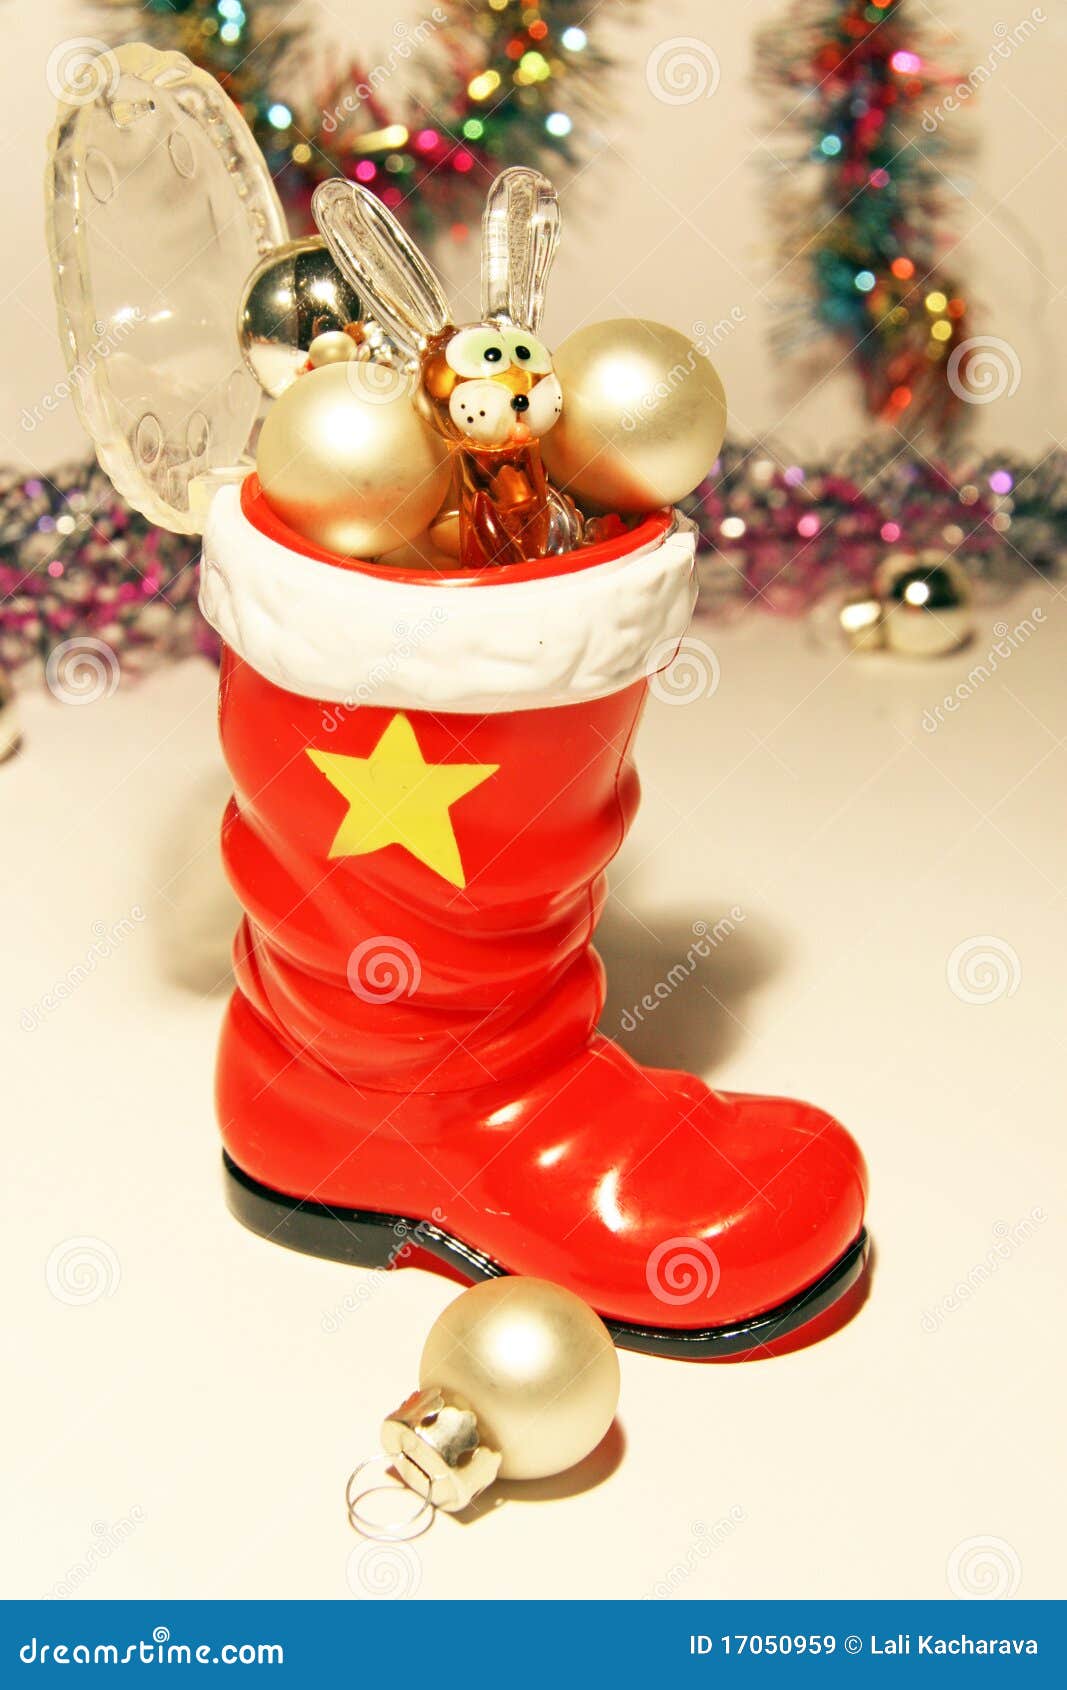 Christmas holiday stock image. Image of ornaments, garland - 17050959